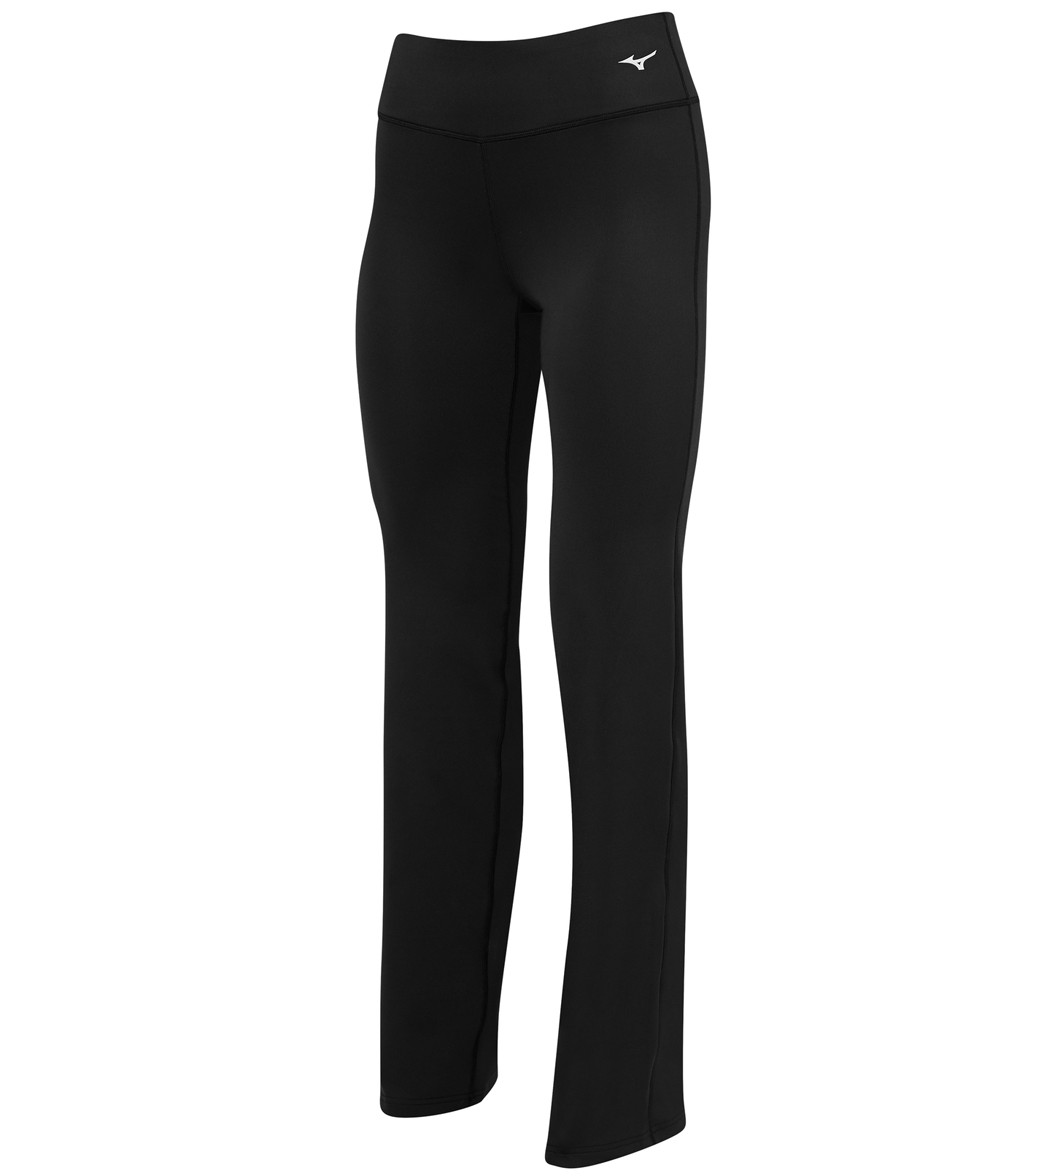 Mizuno Women's Align Volleyball Pants - Black Medium - Swimoutlet.com